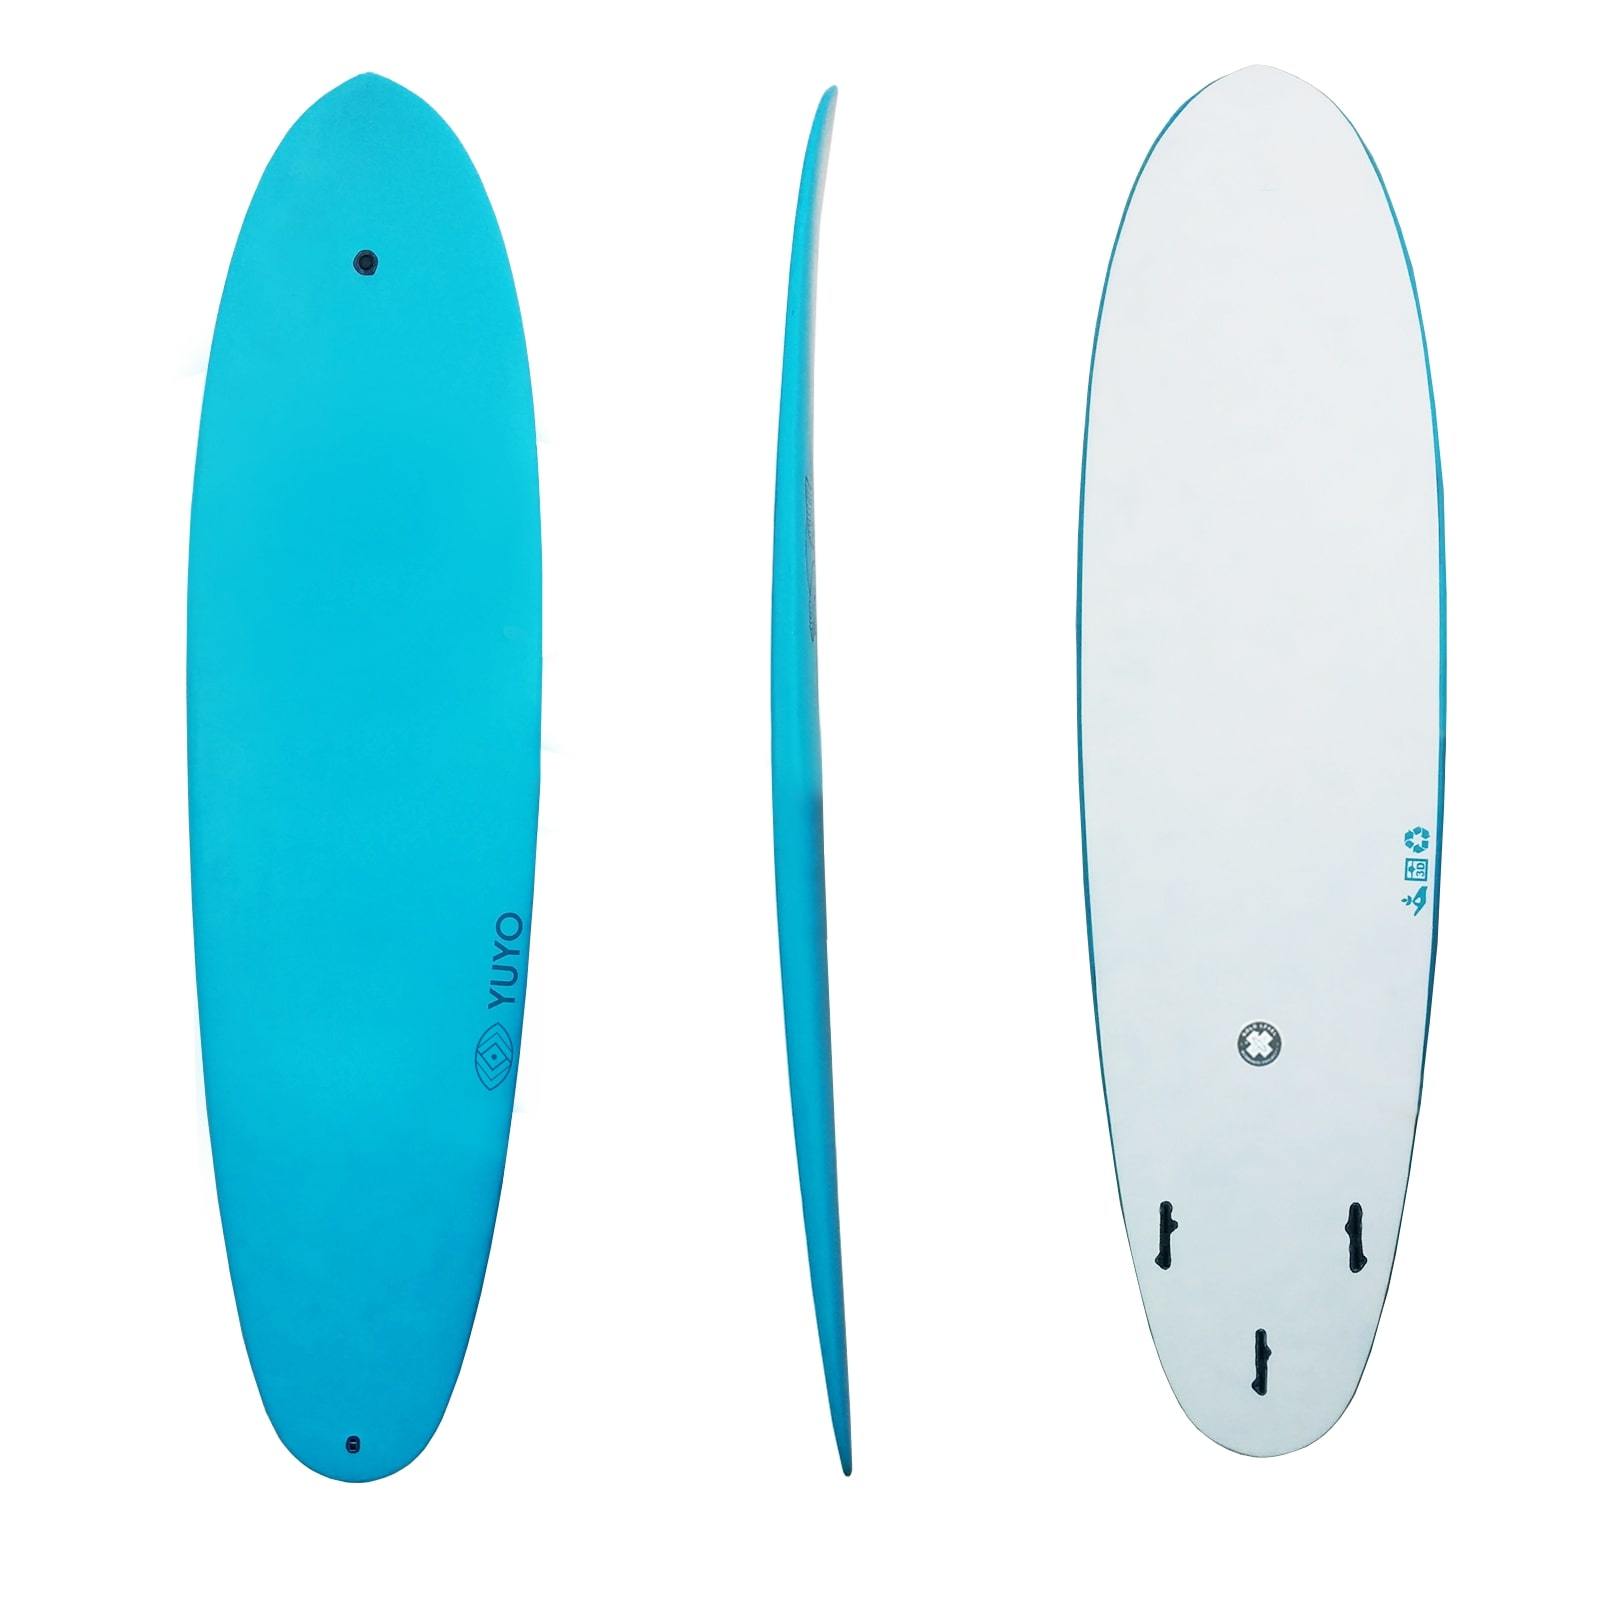  Surf ecoboard Marlin 6'8 mini-malibu